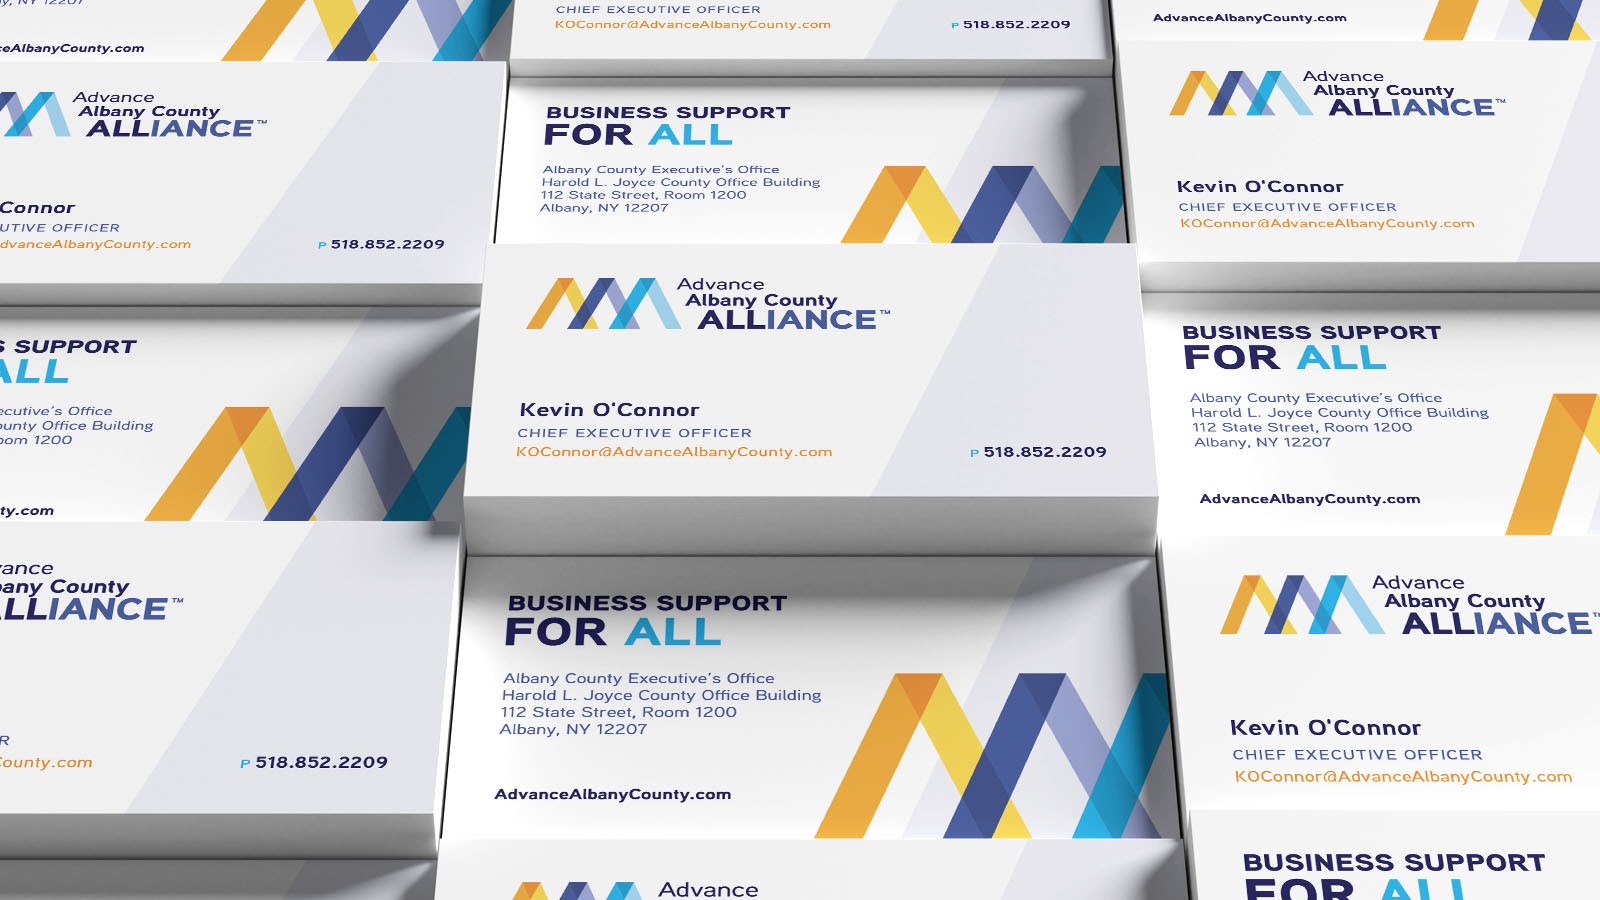 Advance Albany County Alliance | Advance Albany County Alliance Business Card